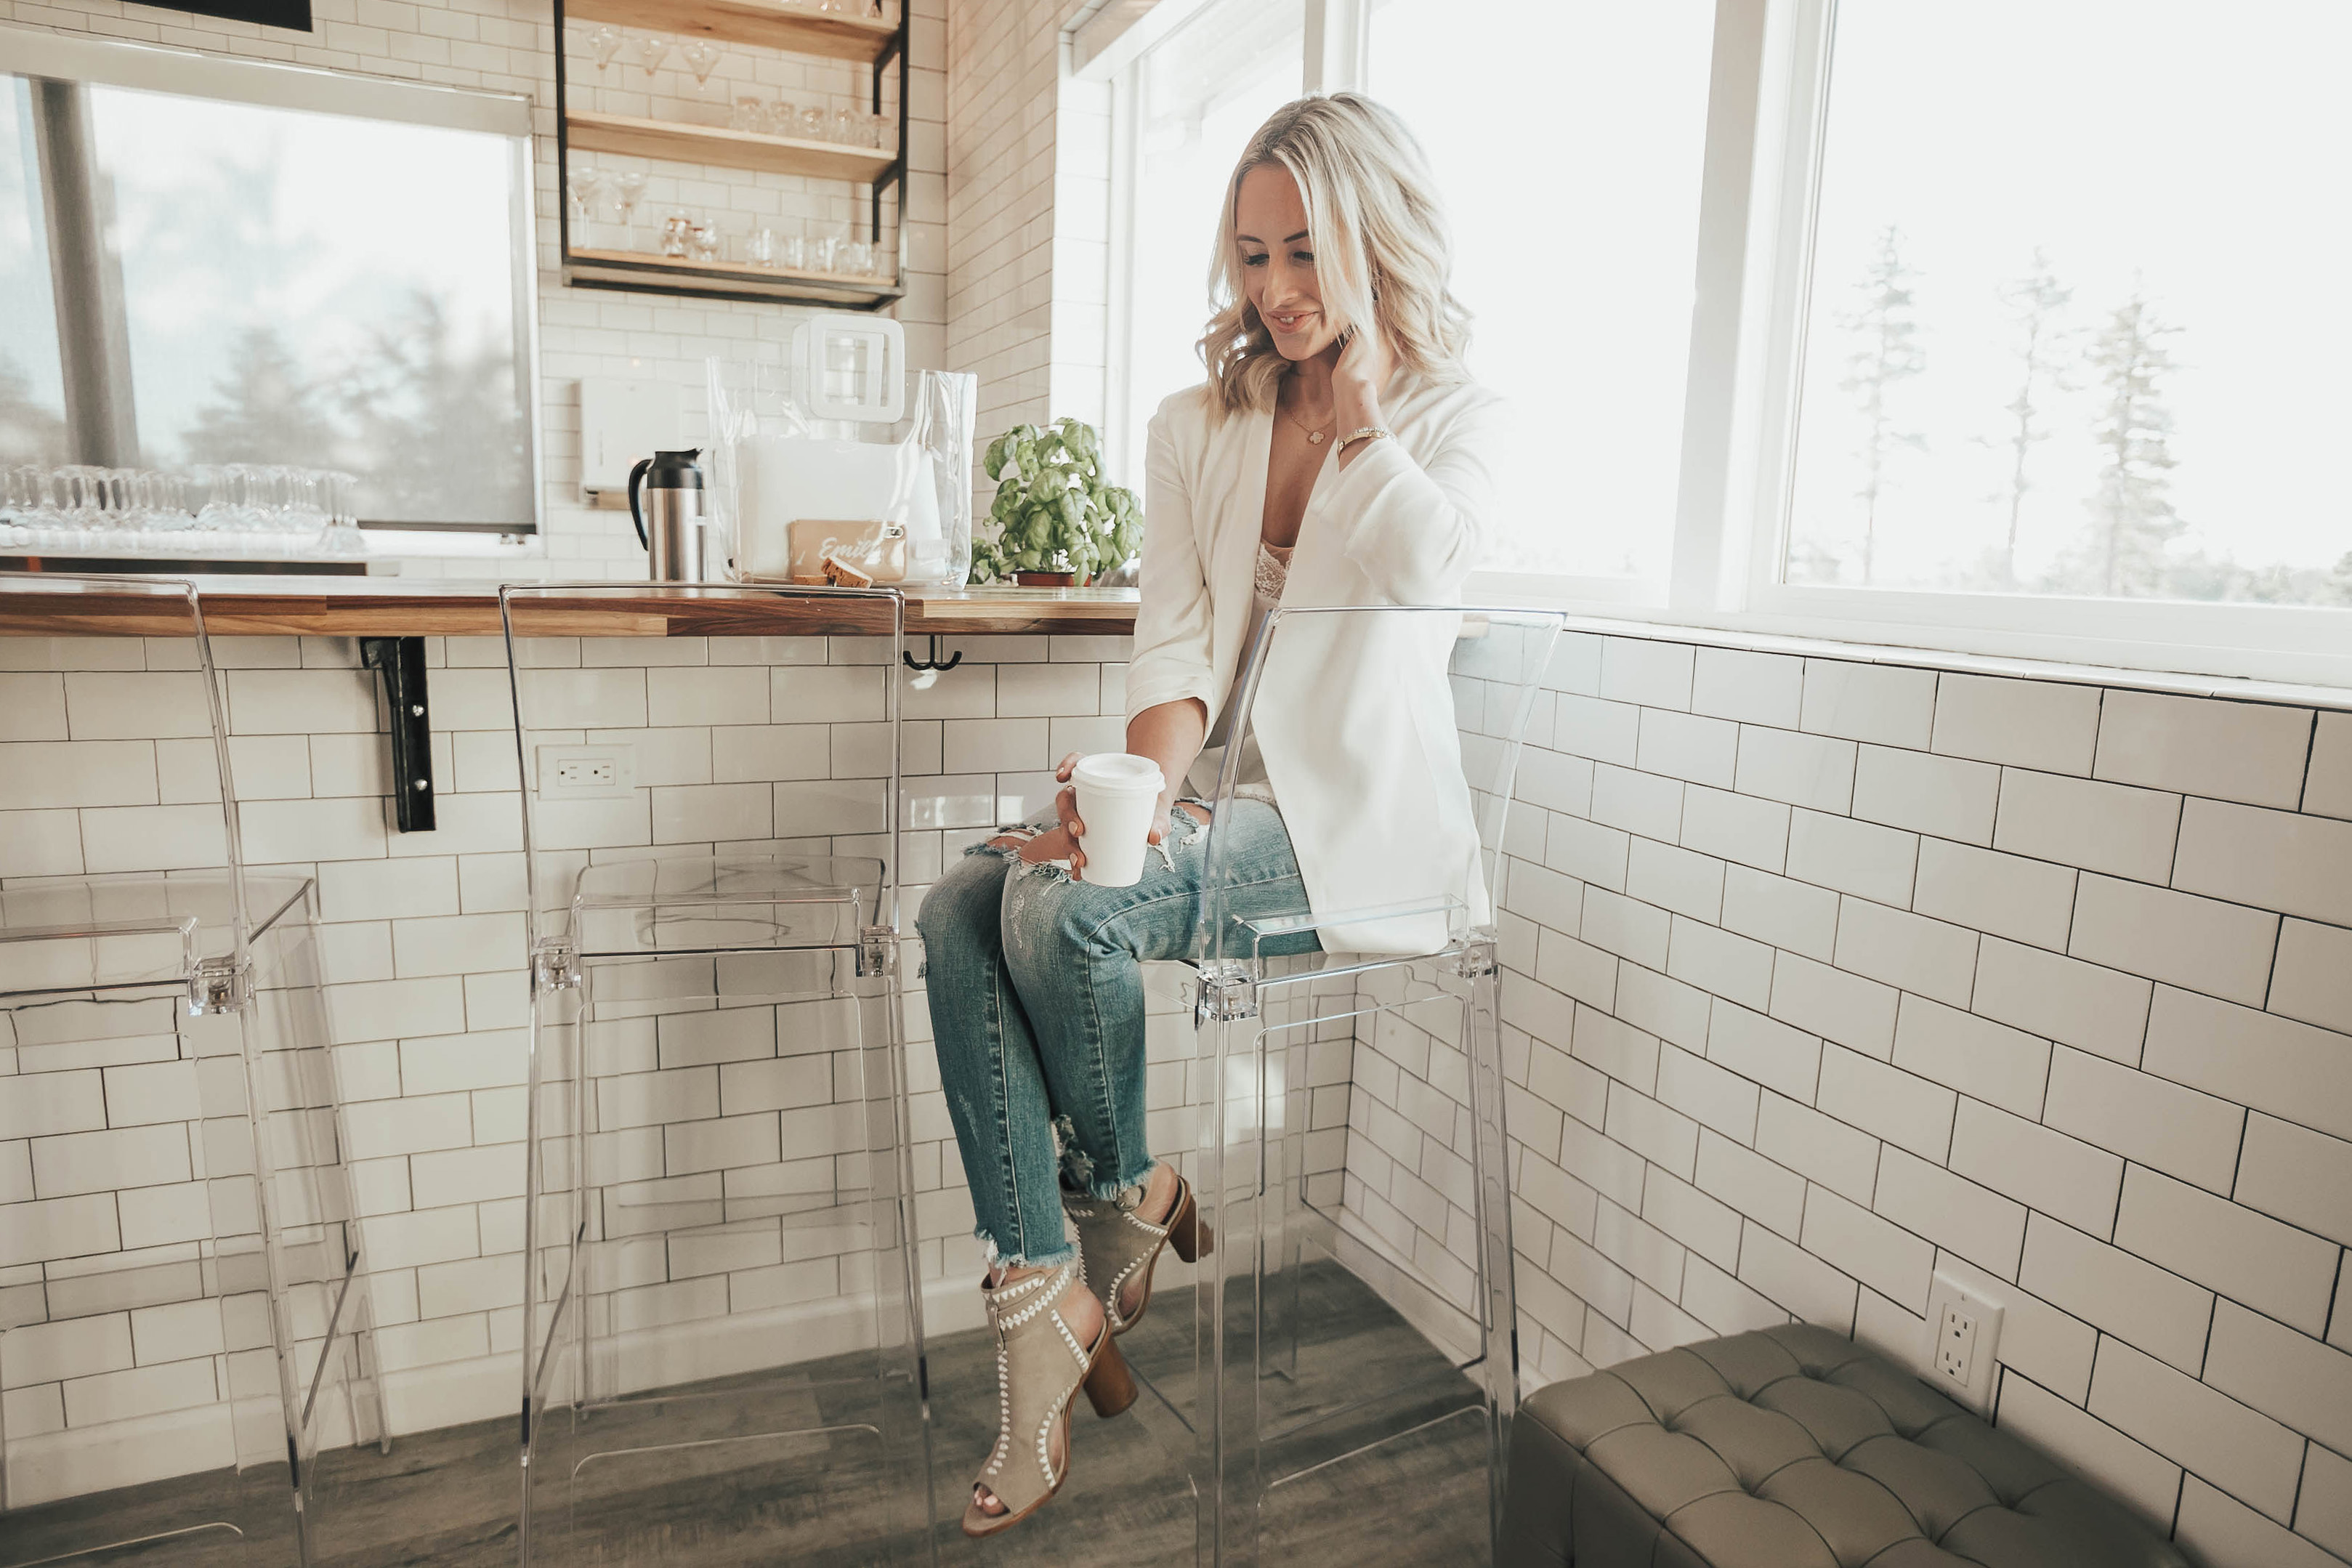 Reno, Nevada Blogger, Emily Farren Wieczorek shares her new favorite shoes - these Grey Embroidered Heels from Bernardo via Zappos.